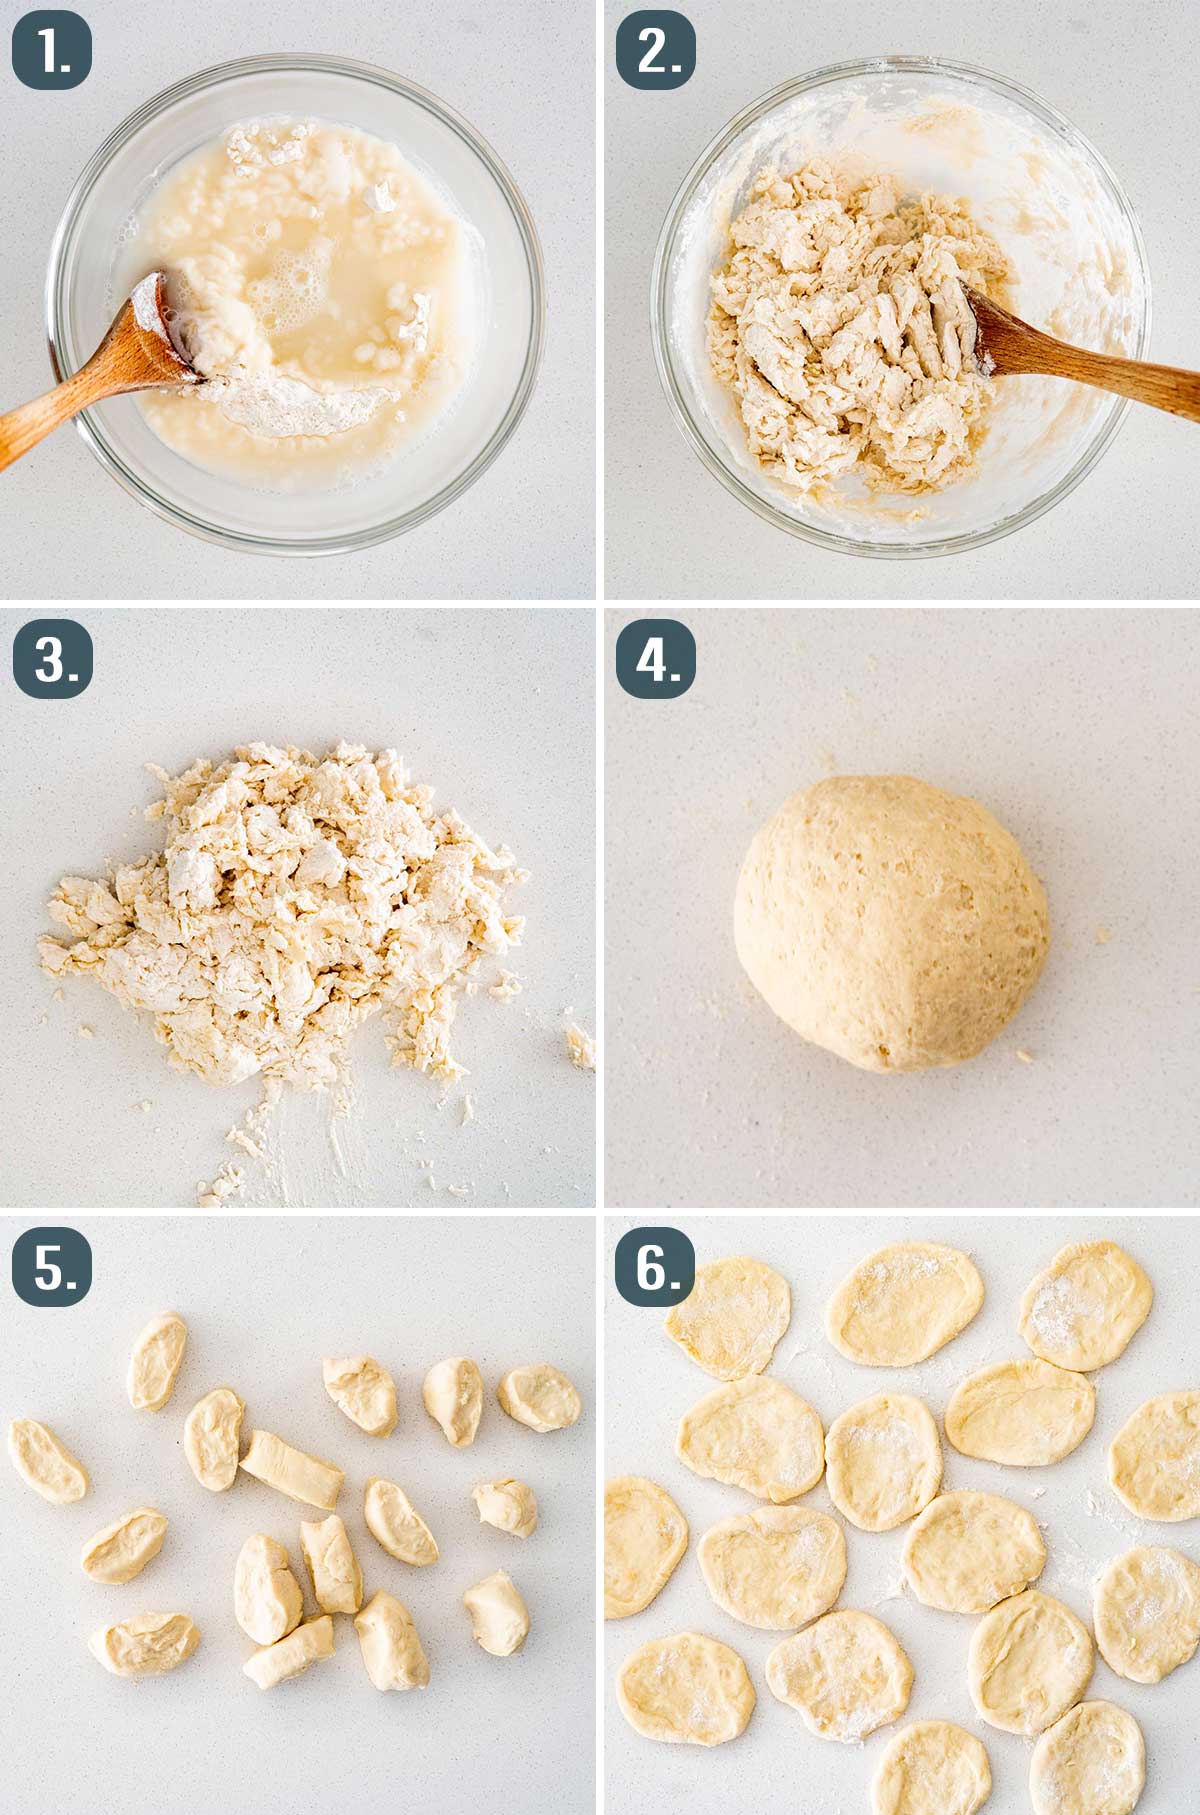 process shots showing how to make dough for mandarin pancakes.